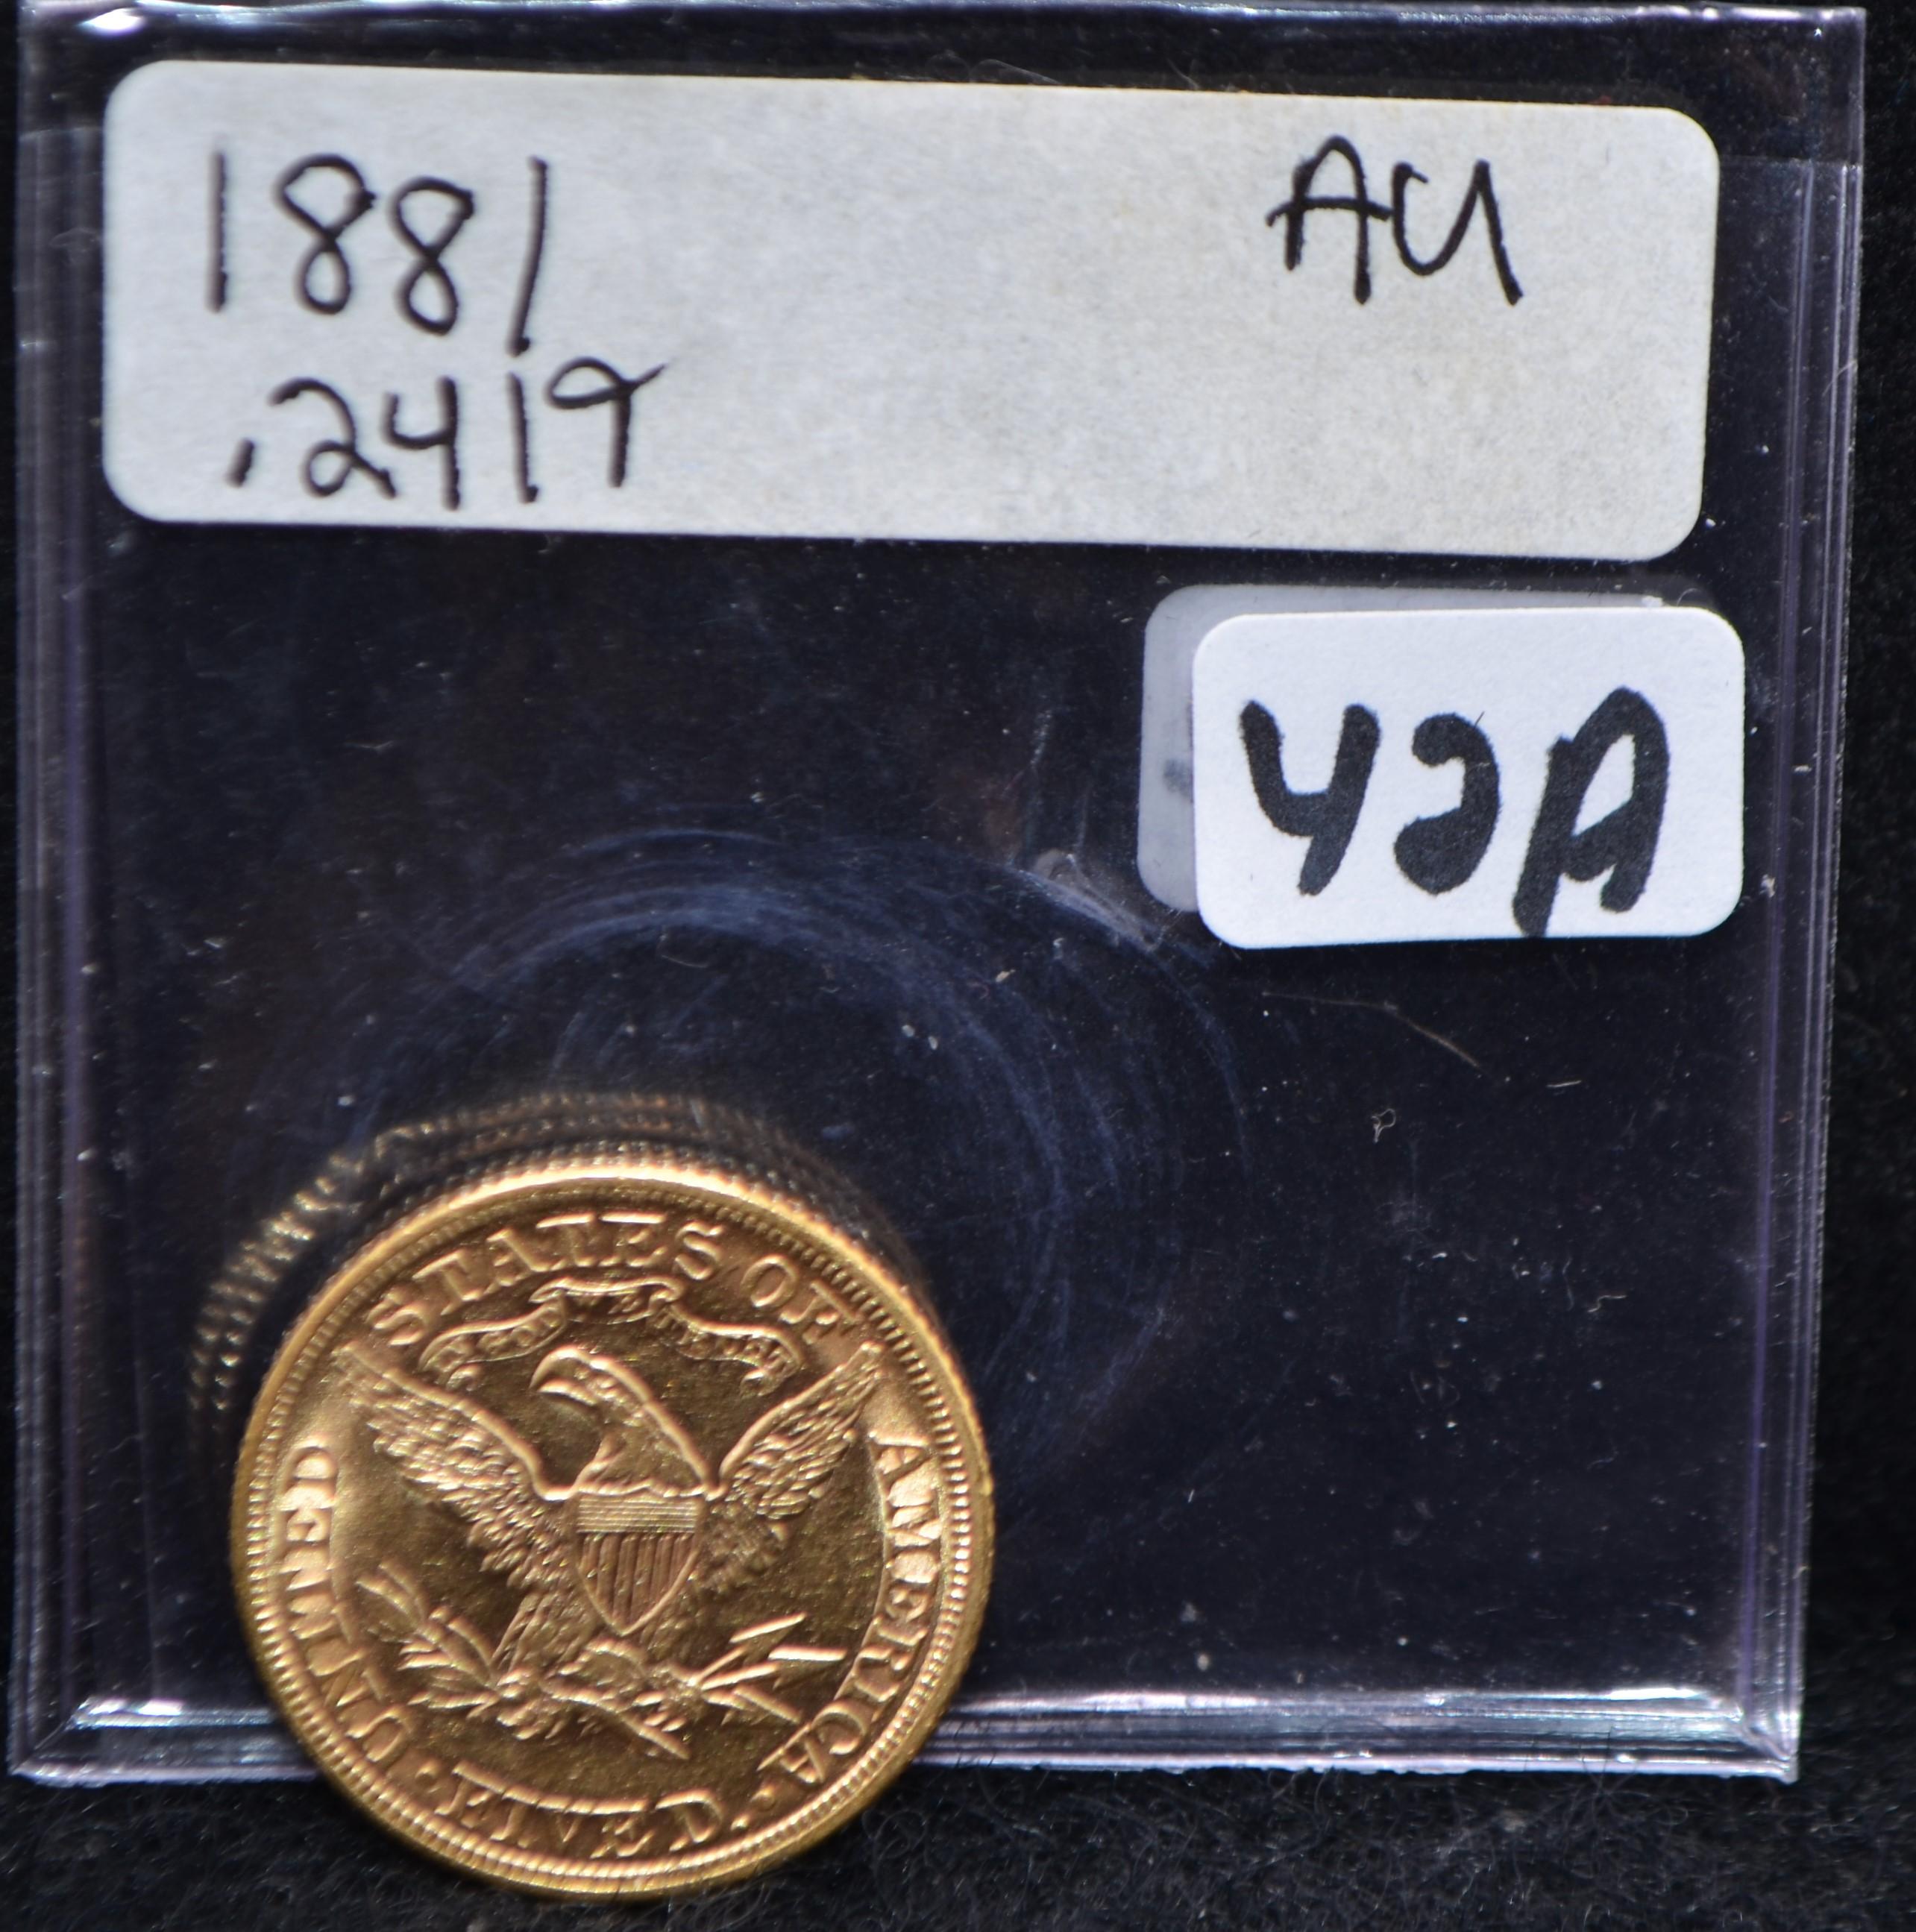 1881 $5 LIBERTY GOLD COIN